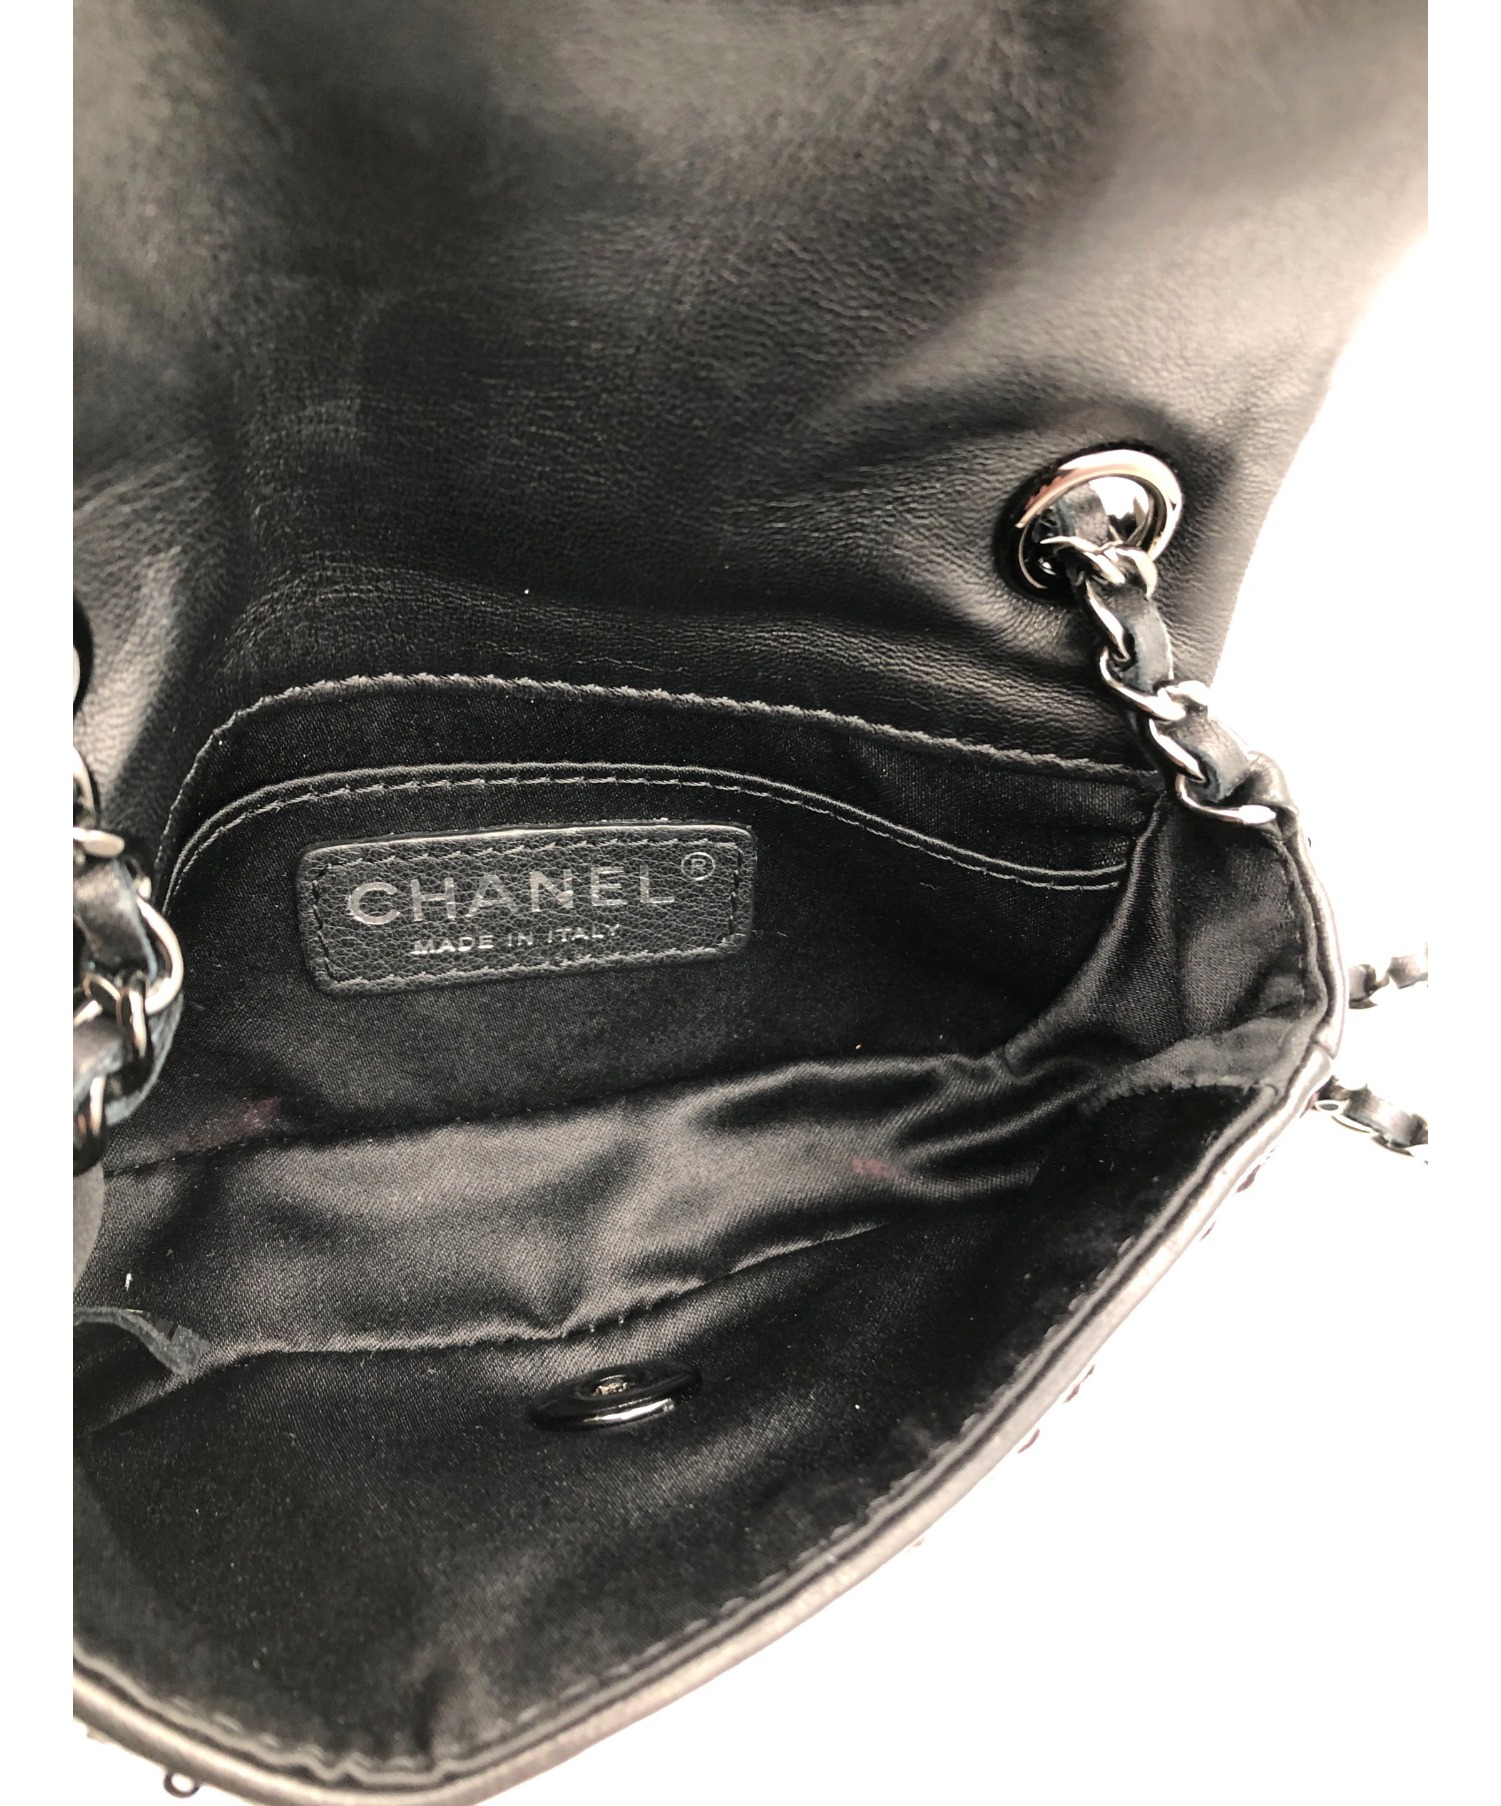 CHANEL (シャネル) スパンコールミニチェーンショルダーバッグ ブラック×グレー サイズ:-